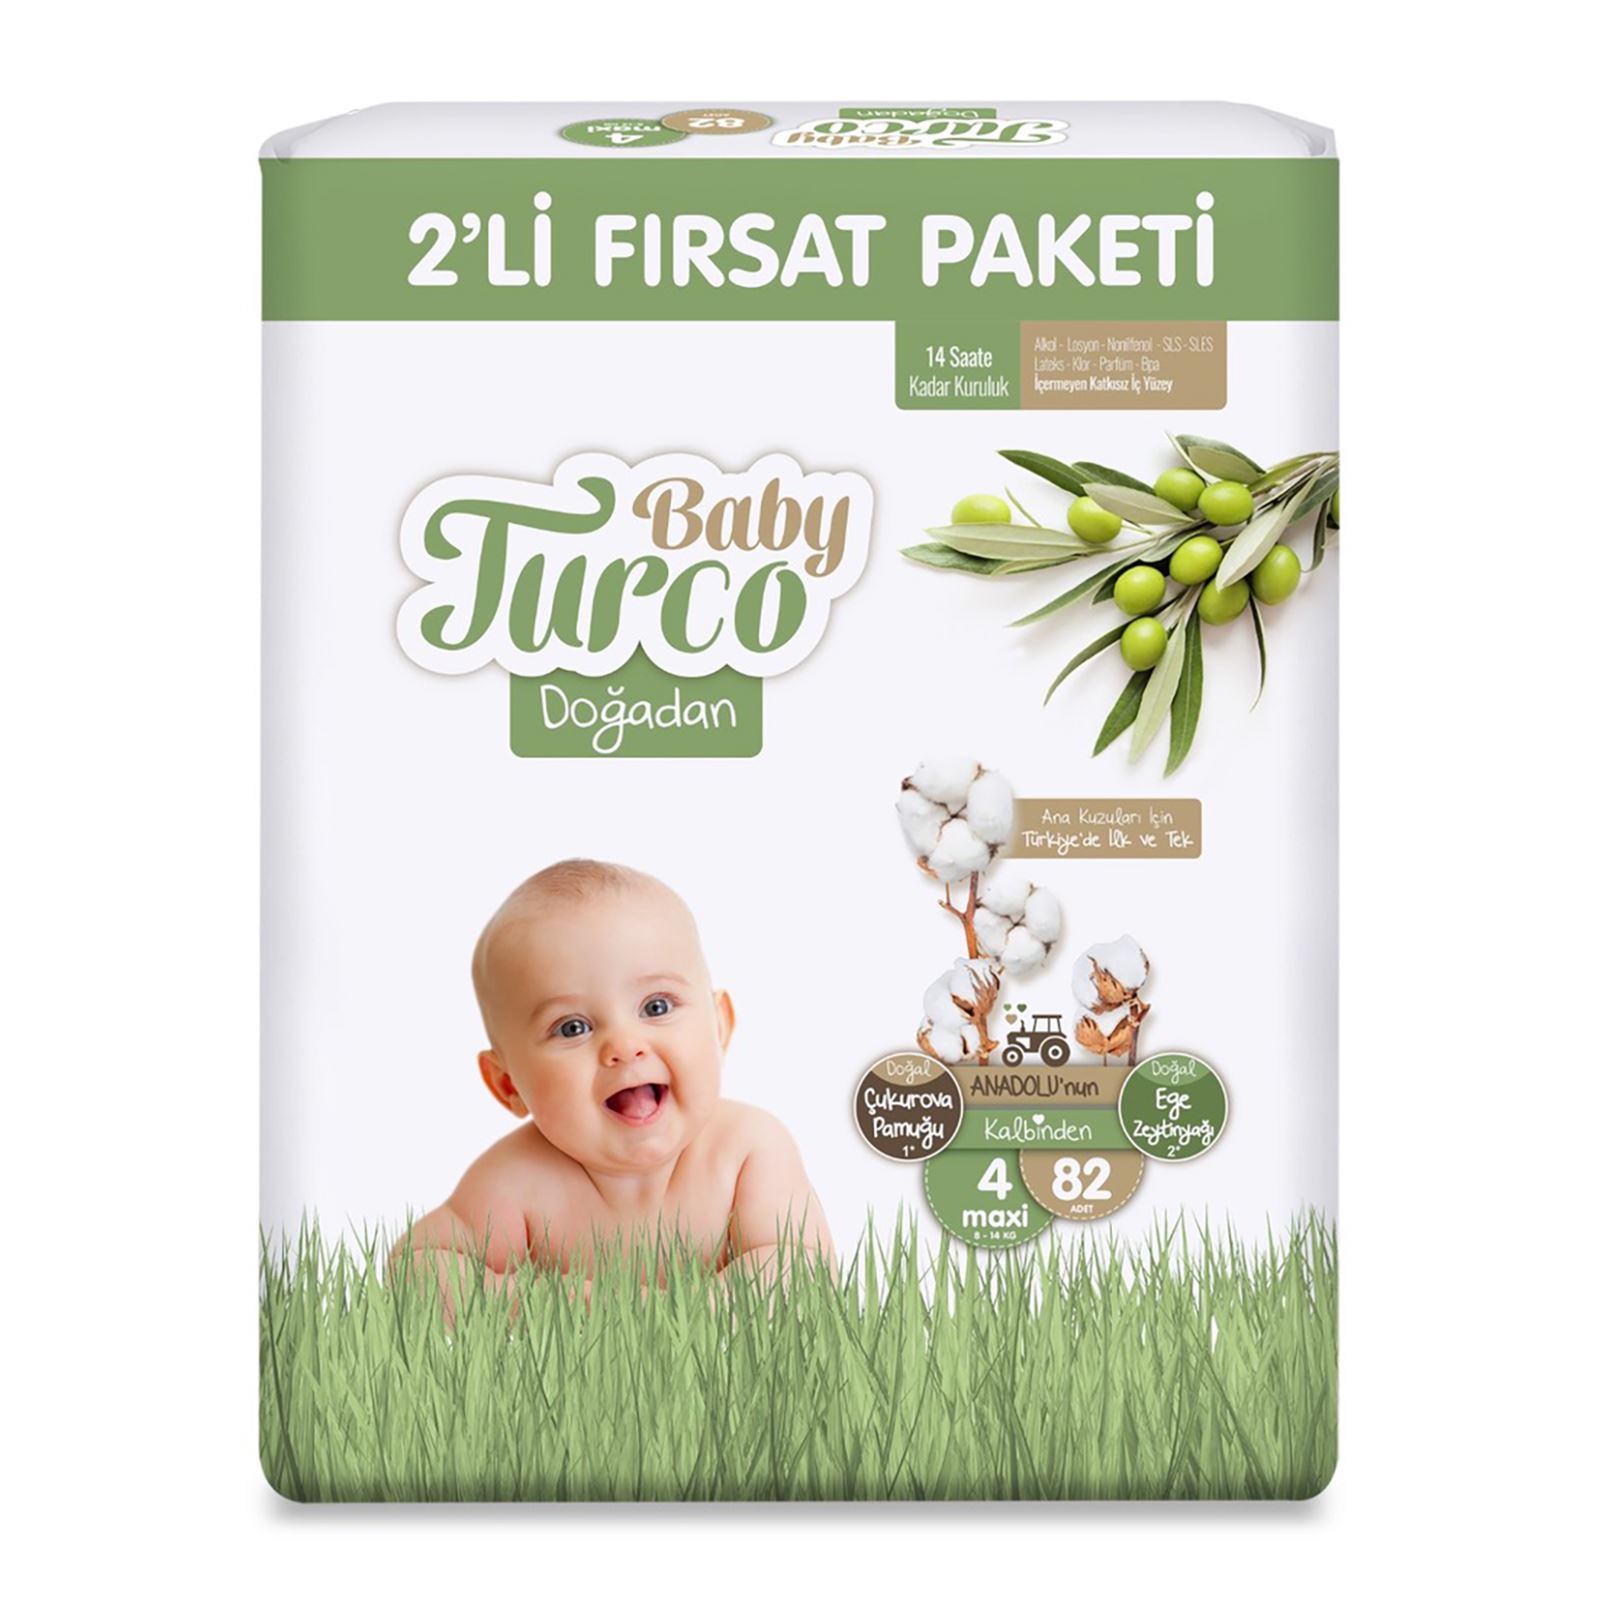 Baby Turco Doğadan Fırsat Paketi 4 Maxi Numara 82 Adet